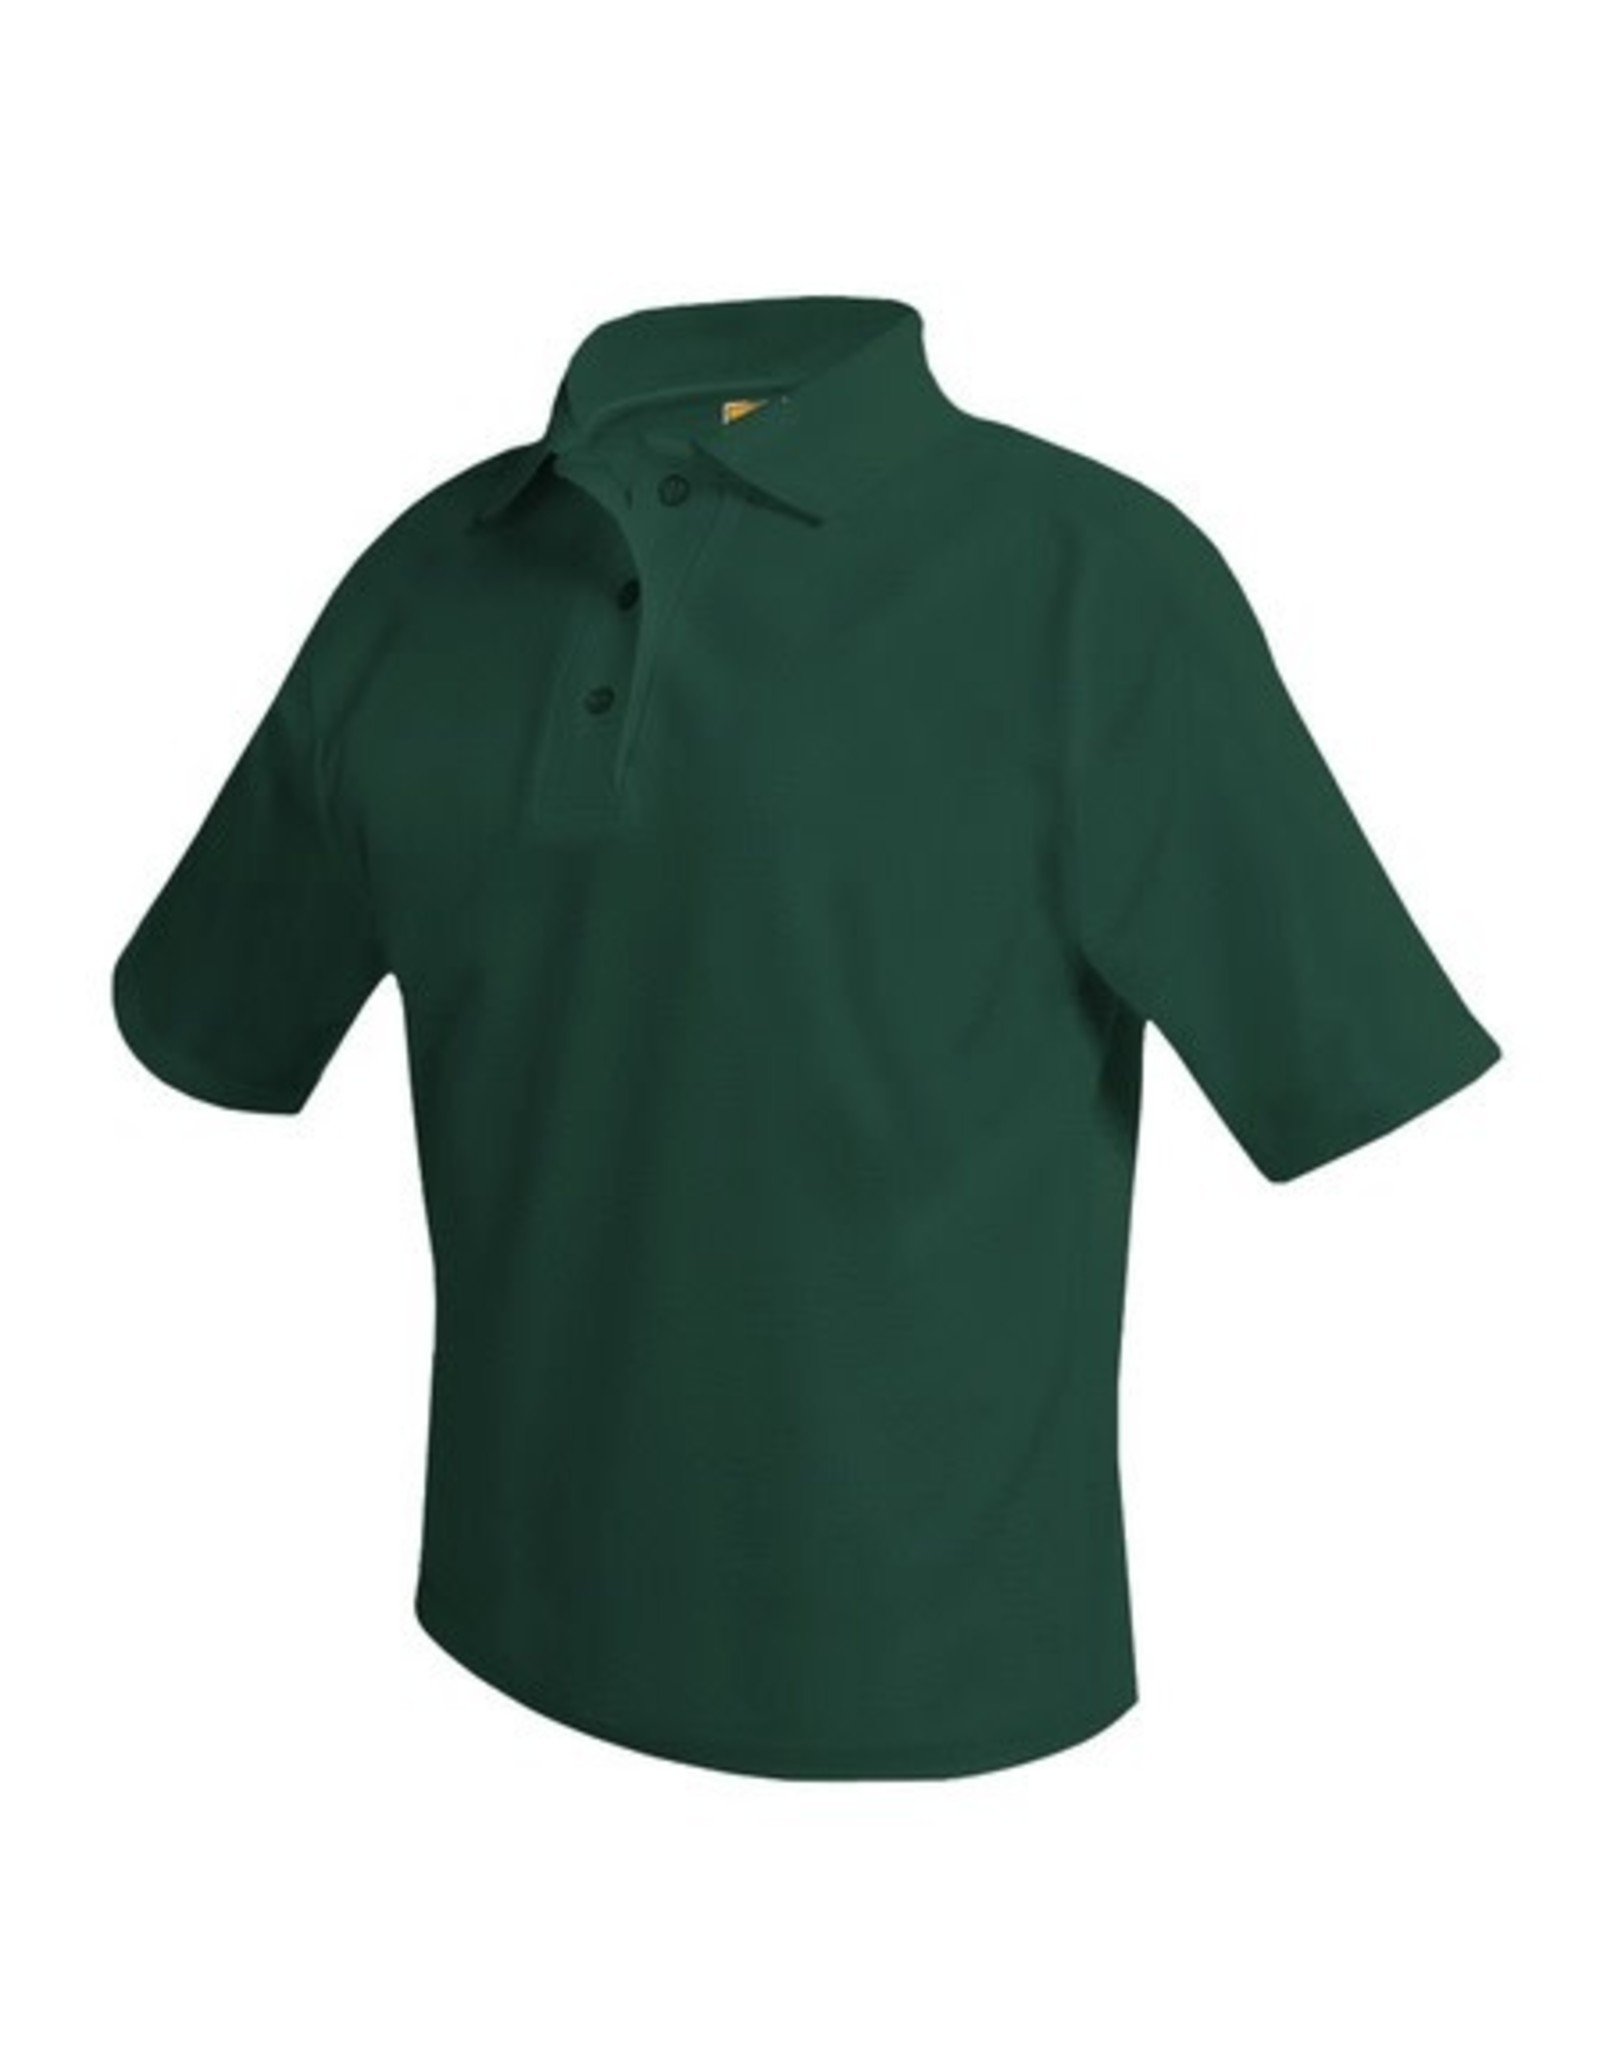 UNIFORM Pique Polo Short Sleeve Shirt, Unisex